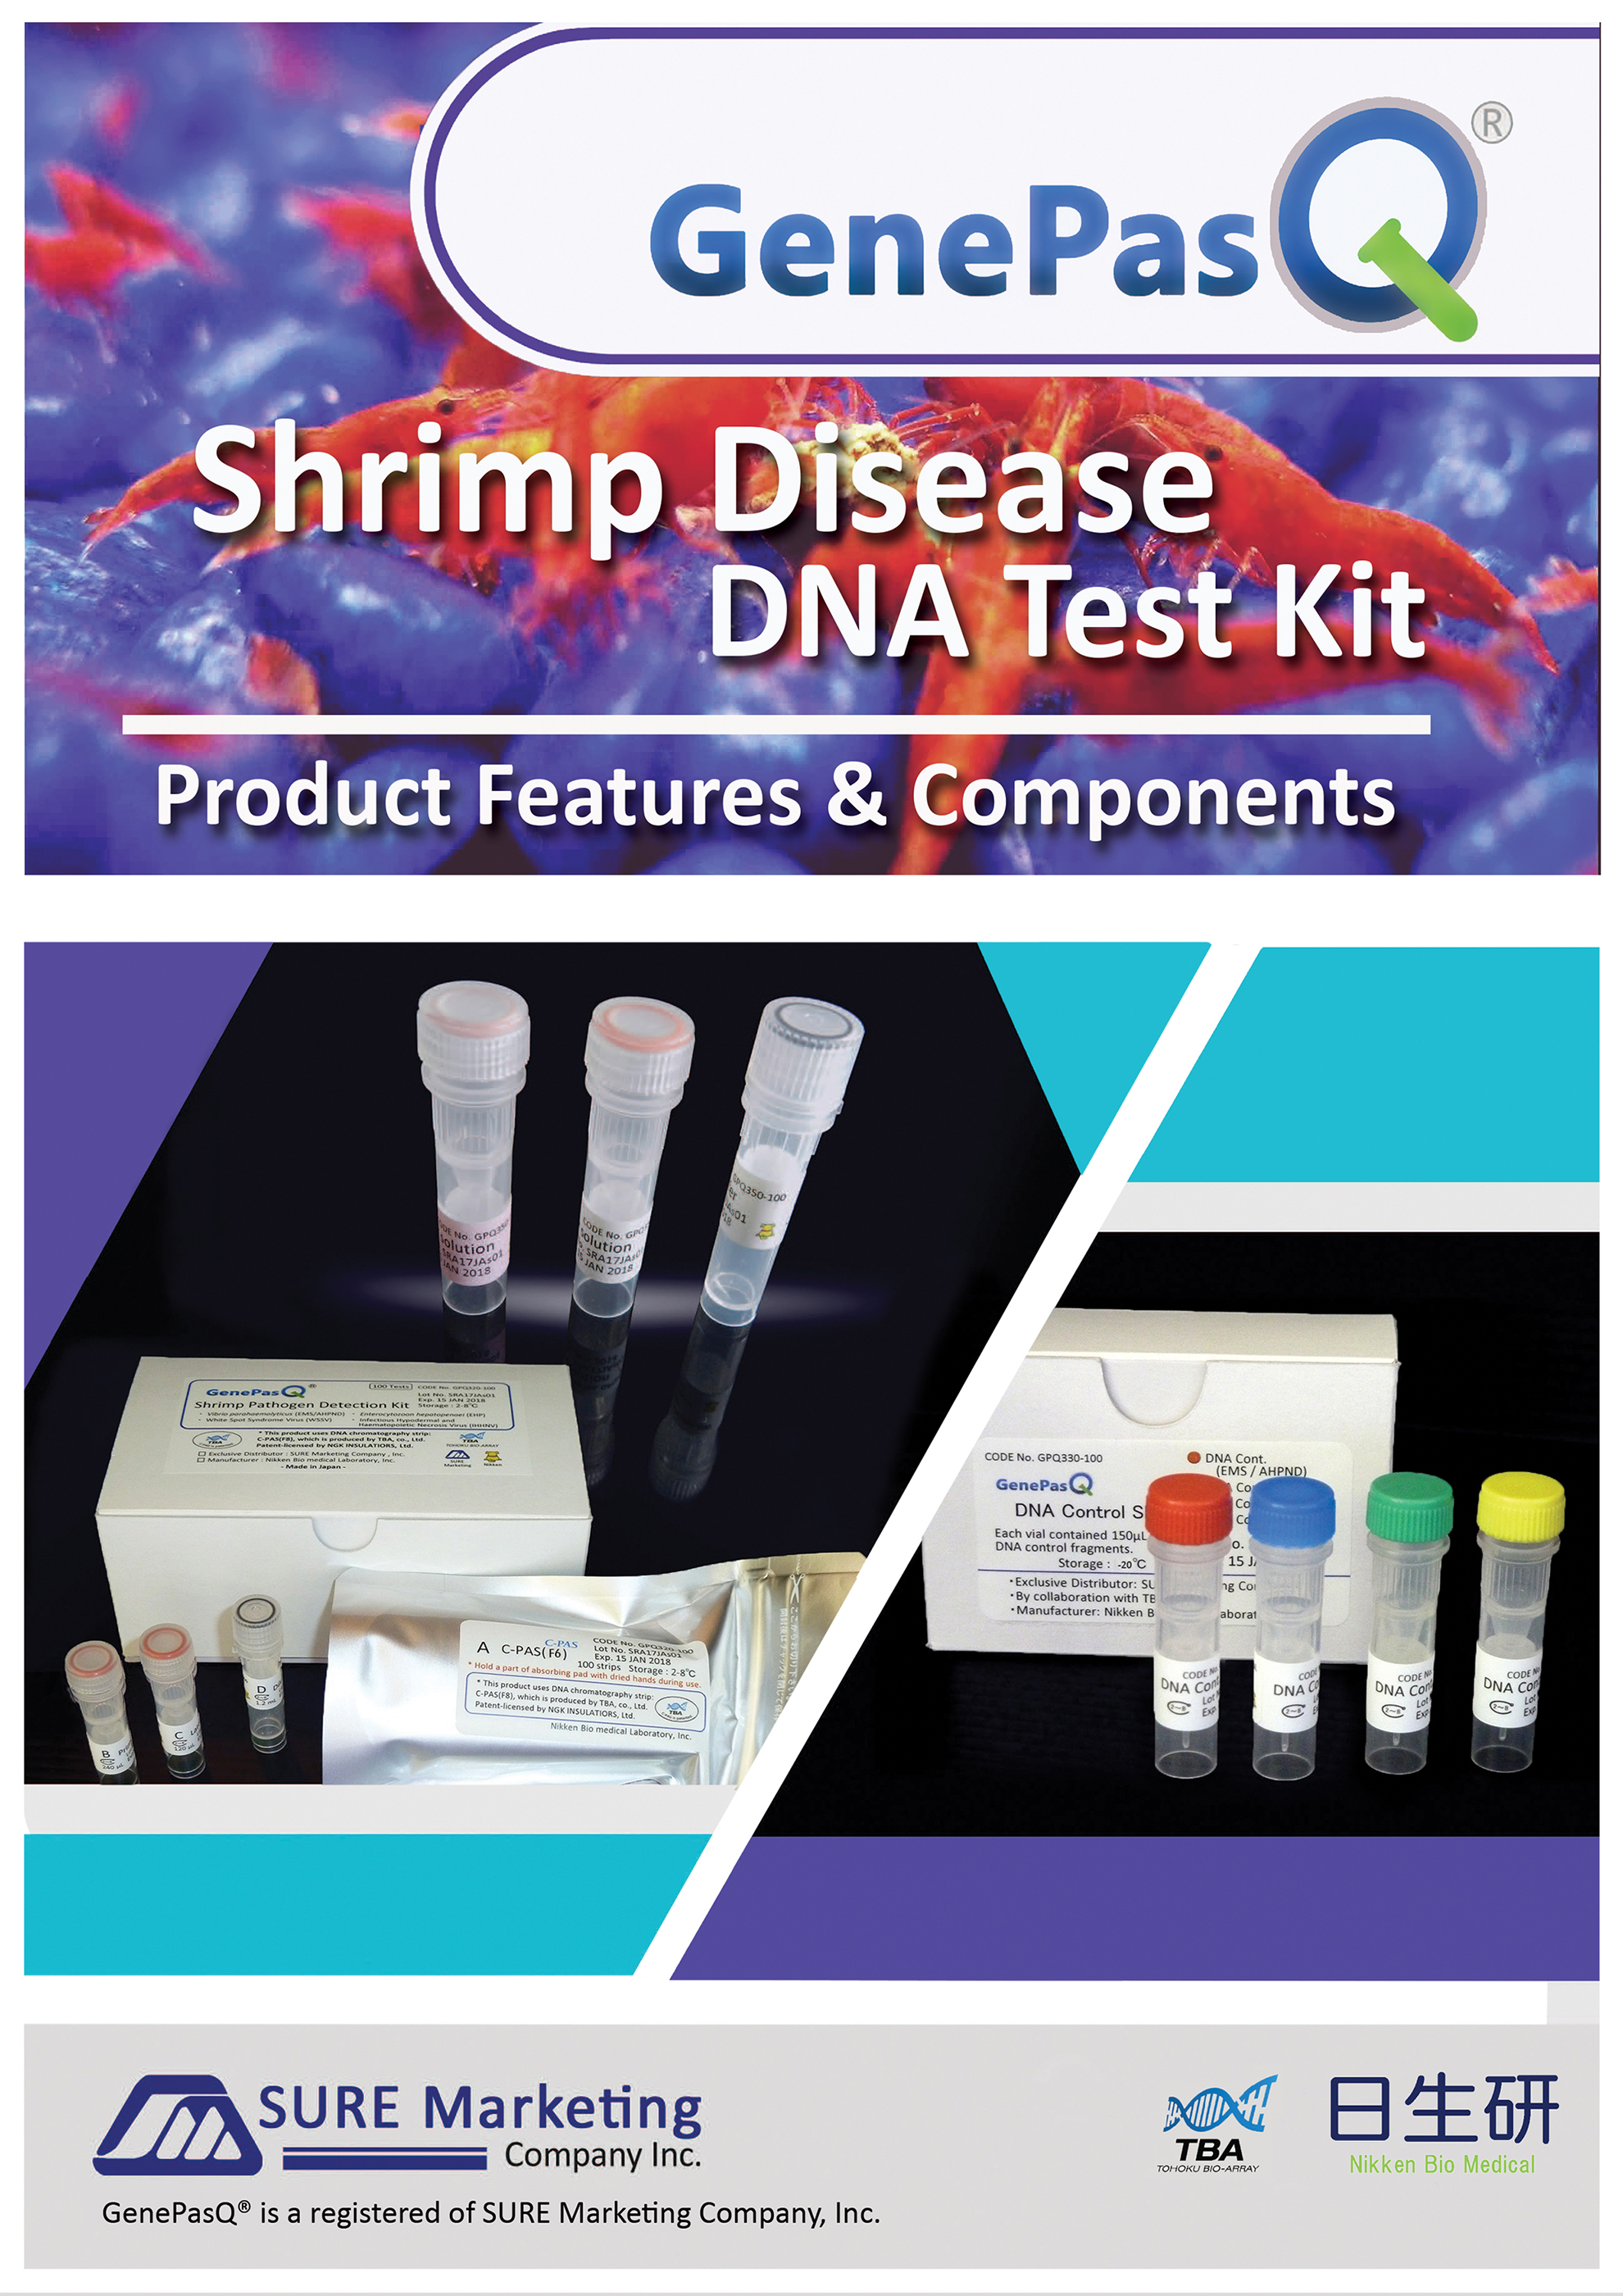 Sample Images of Shrimp Disease Test kits